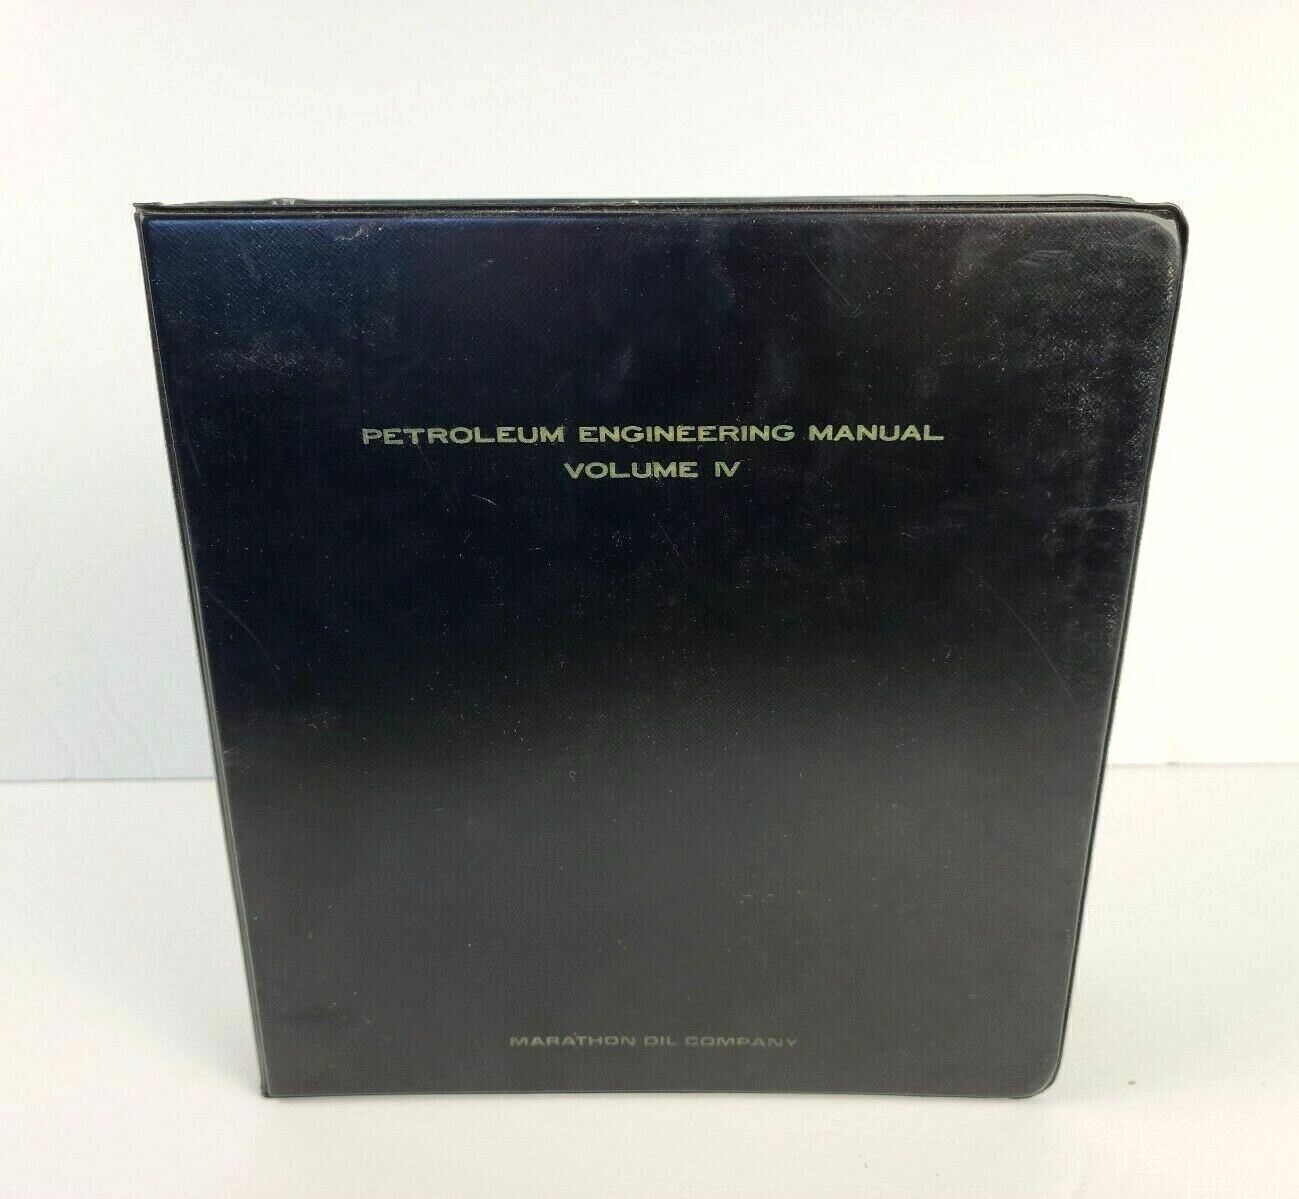 VTG Official 1965 Marathon Oil Company Petroleum Engineering Manual Volume IV